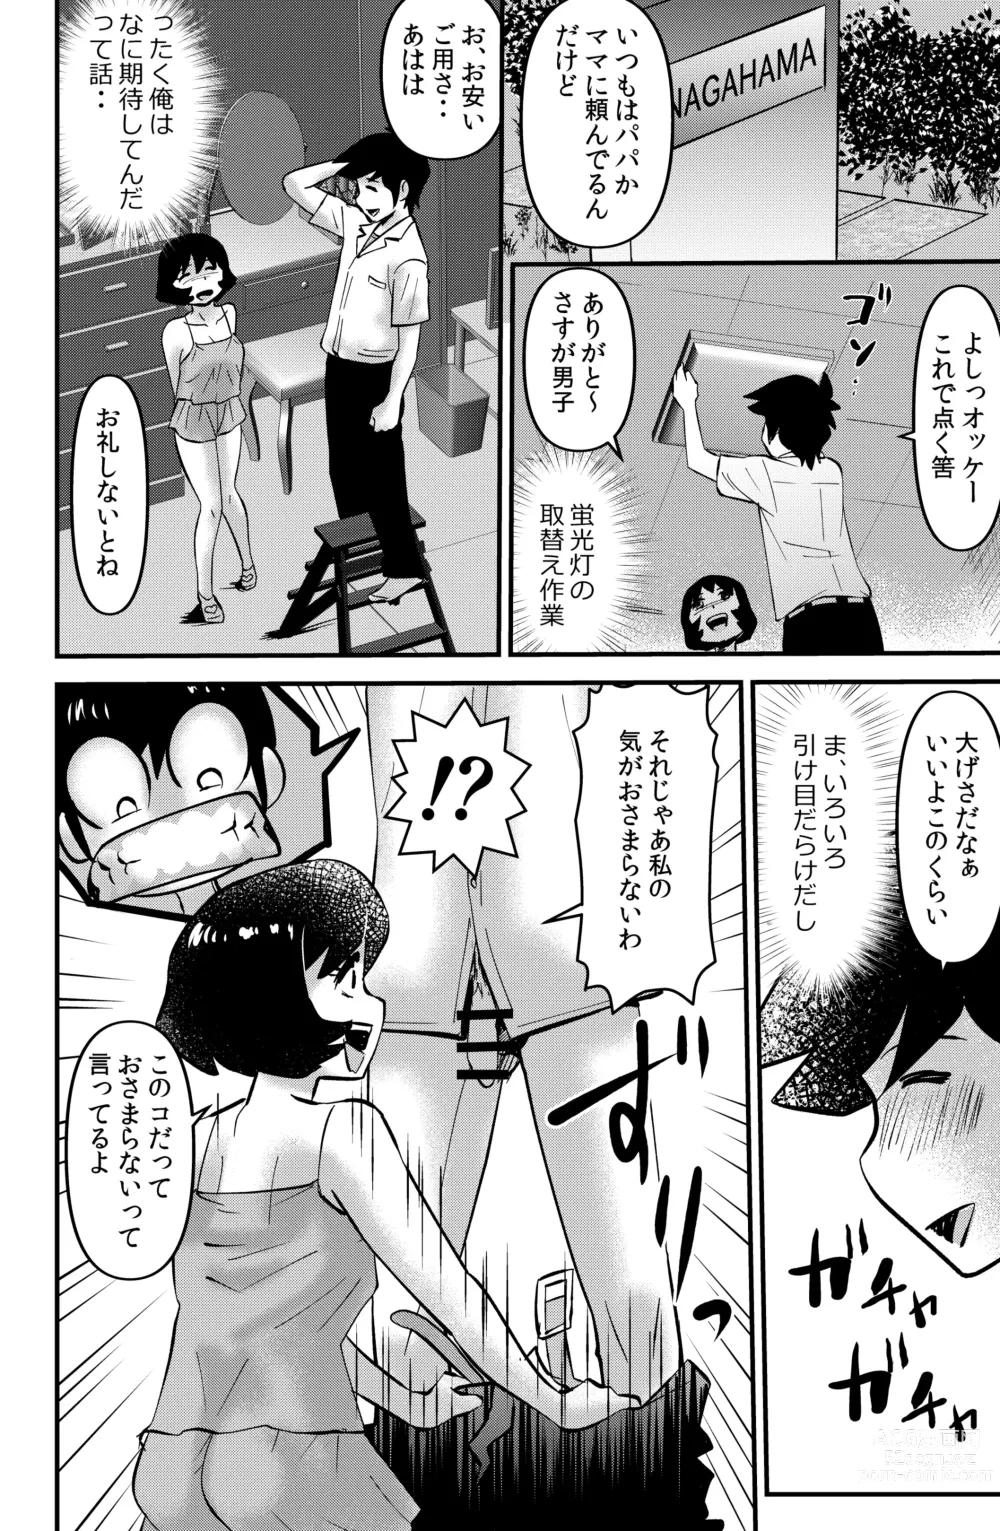 Page 16 of doujinshi Holy Shit!